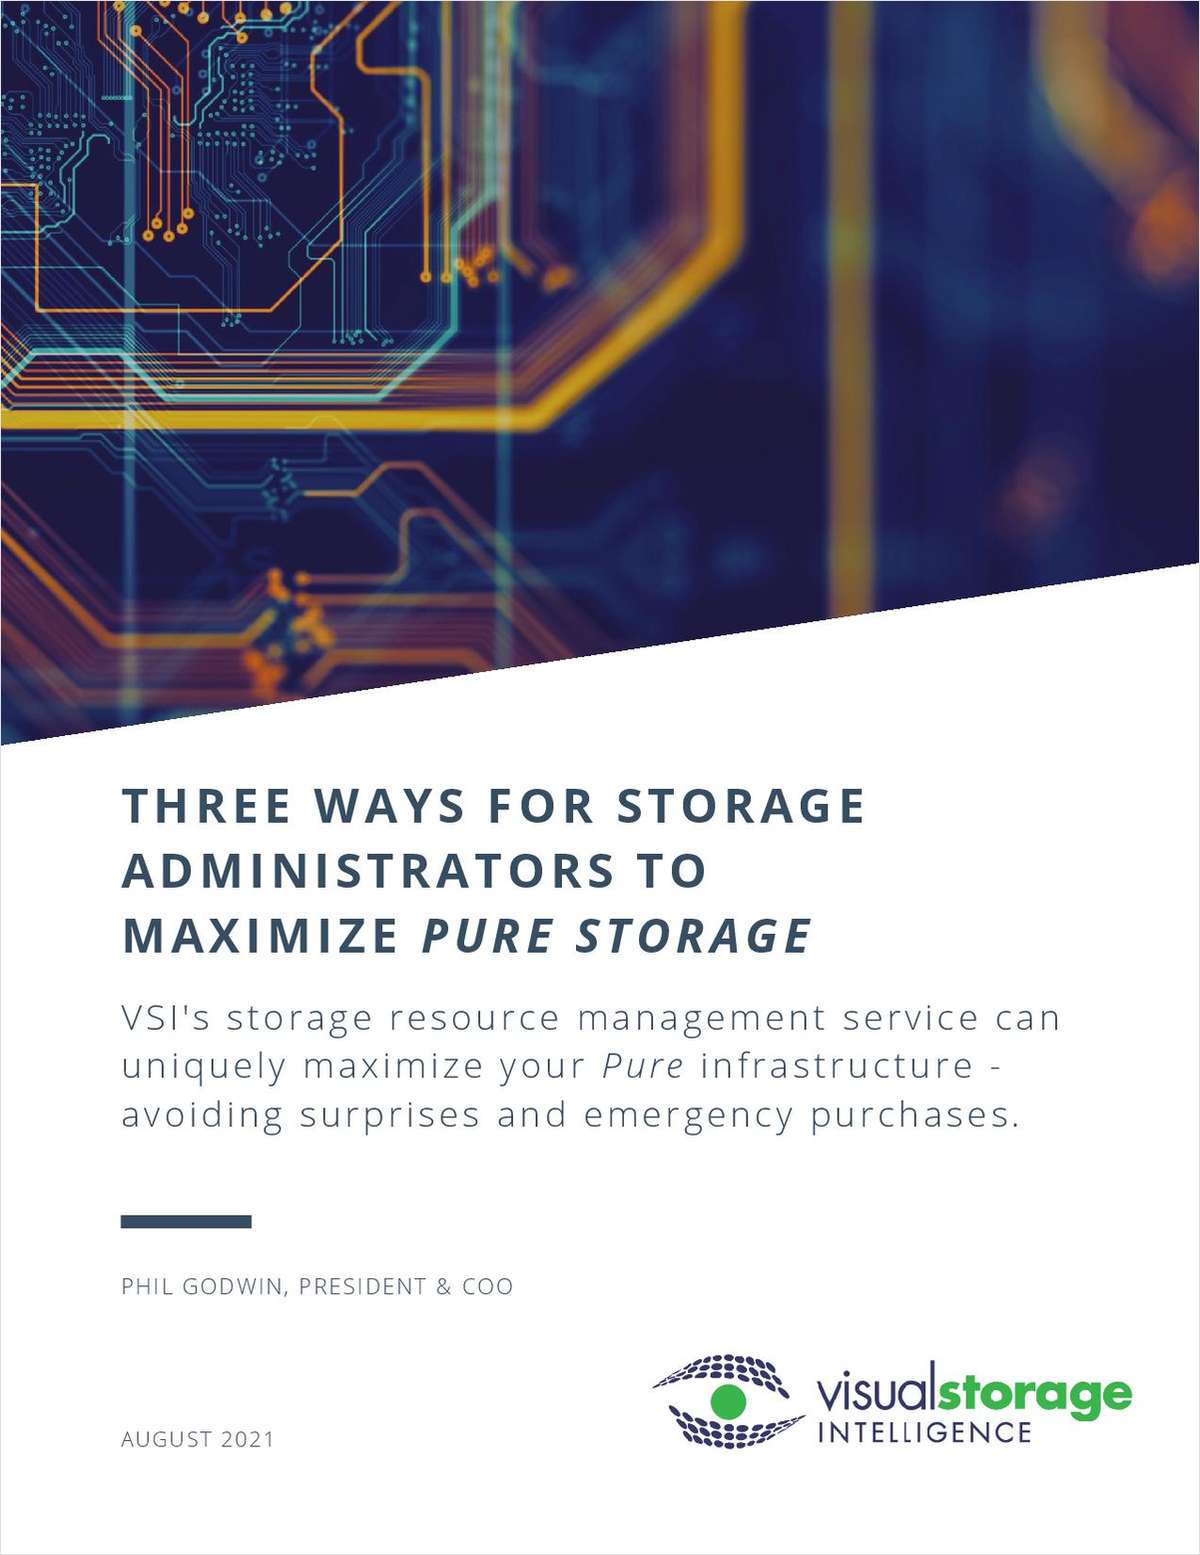 3 Ways for IT Storage Administrators to Maximize Pure Storage